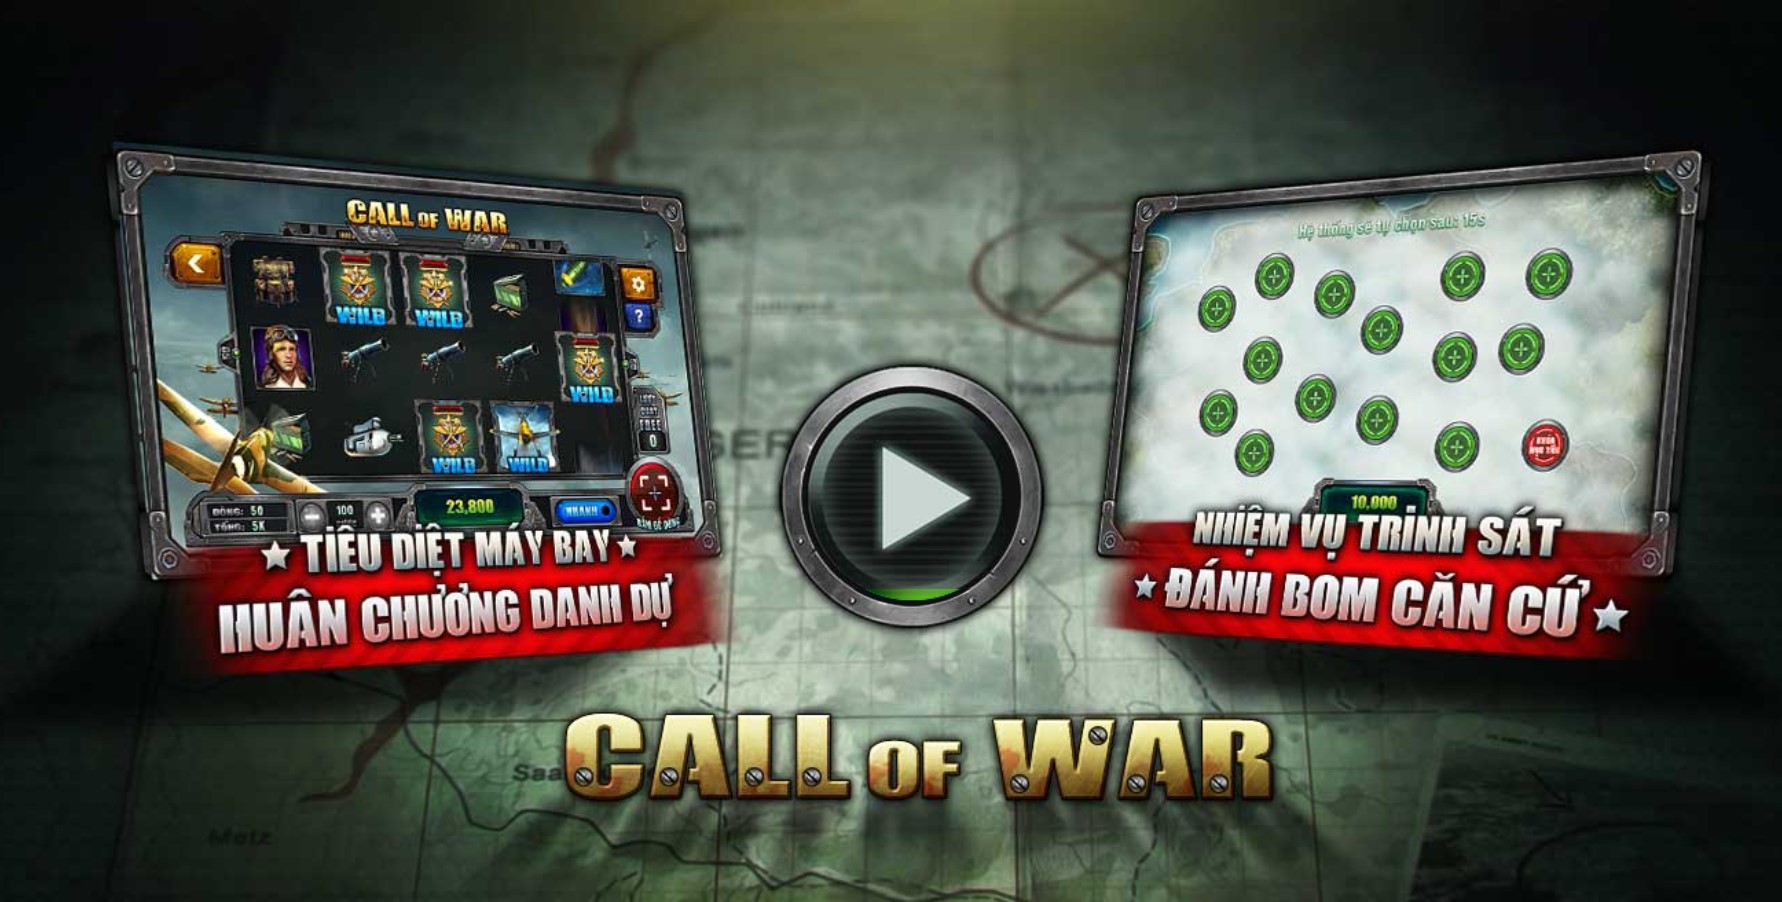 Giới thiệu game Call of War trên UK88